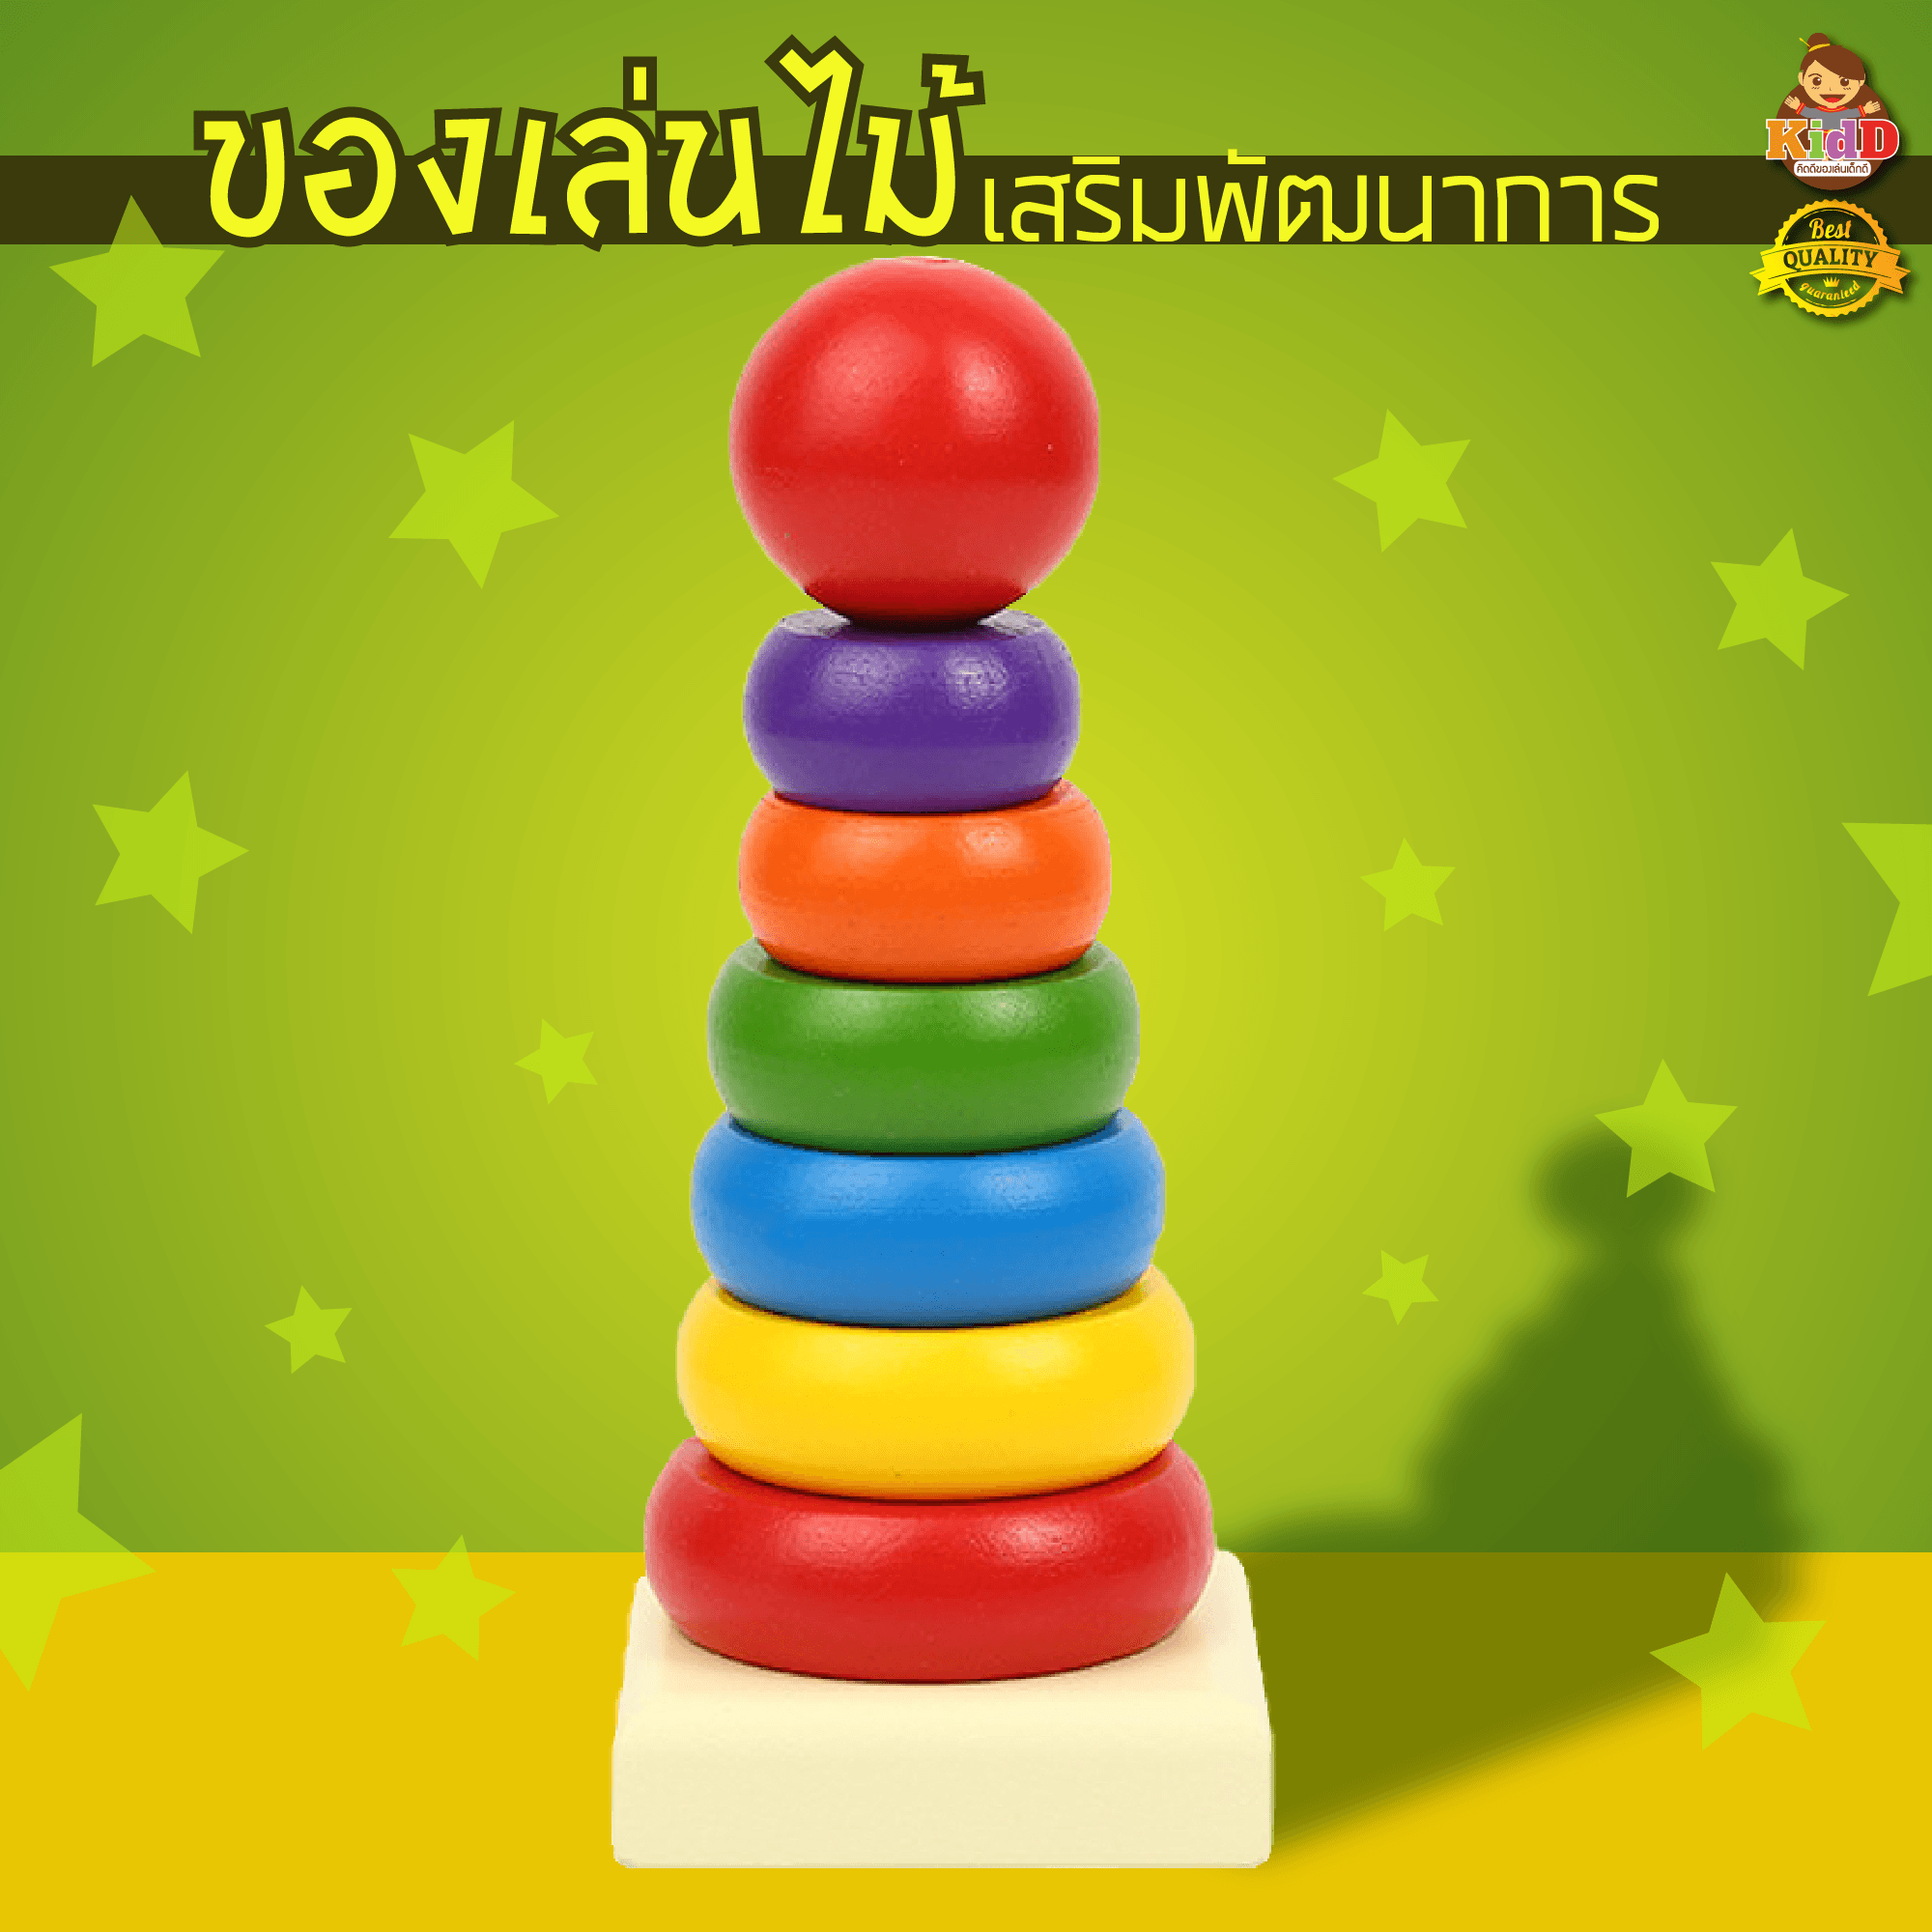 Kiddtoy หอคอยไม้ Rainbow Tower ห่วงไม้เรียงชั้น ของเล่นไม้สวมหลัก ของเล่นไม้ เสริมพัฒนาการเด็ก